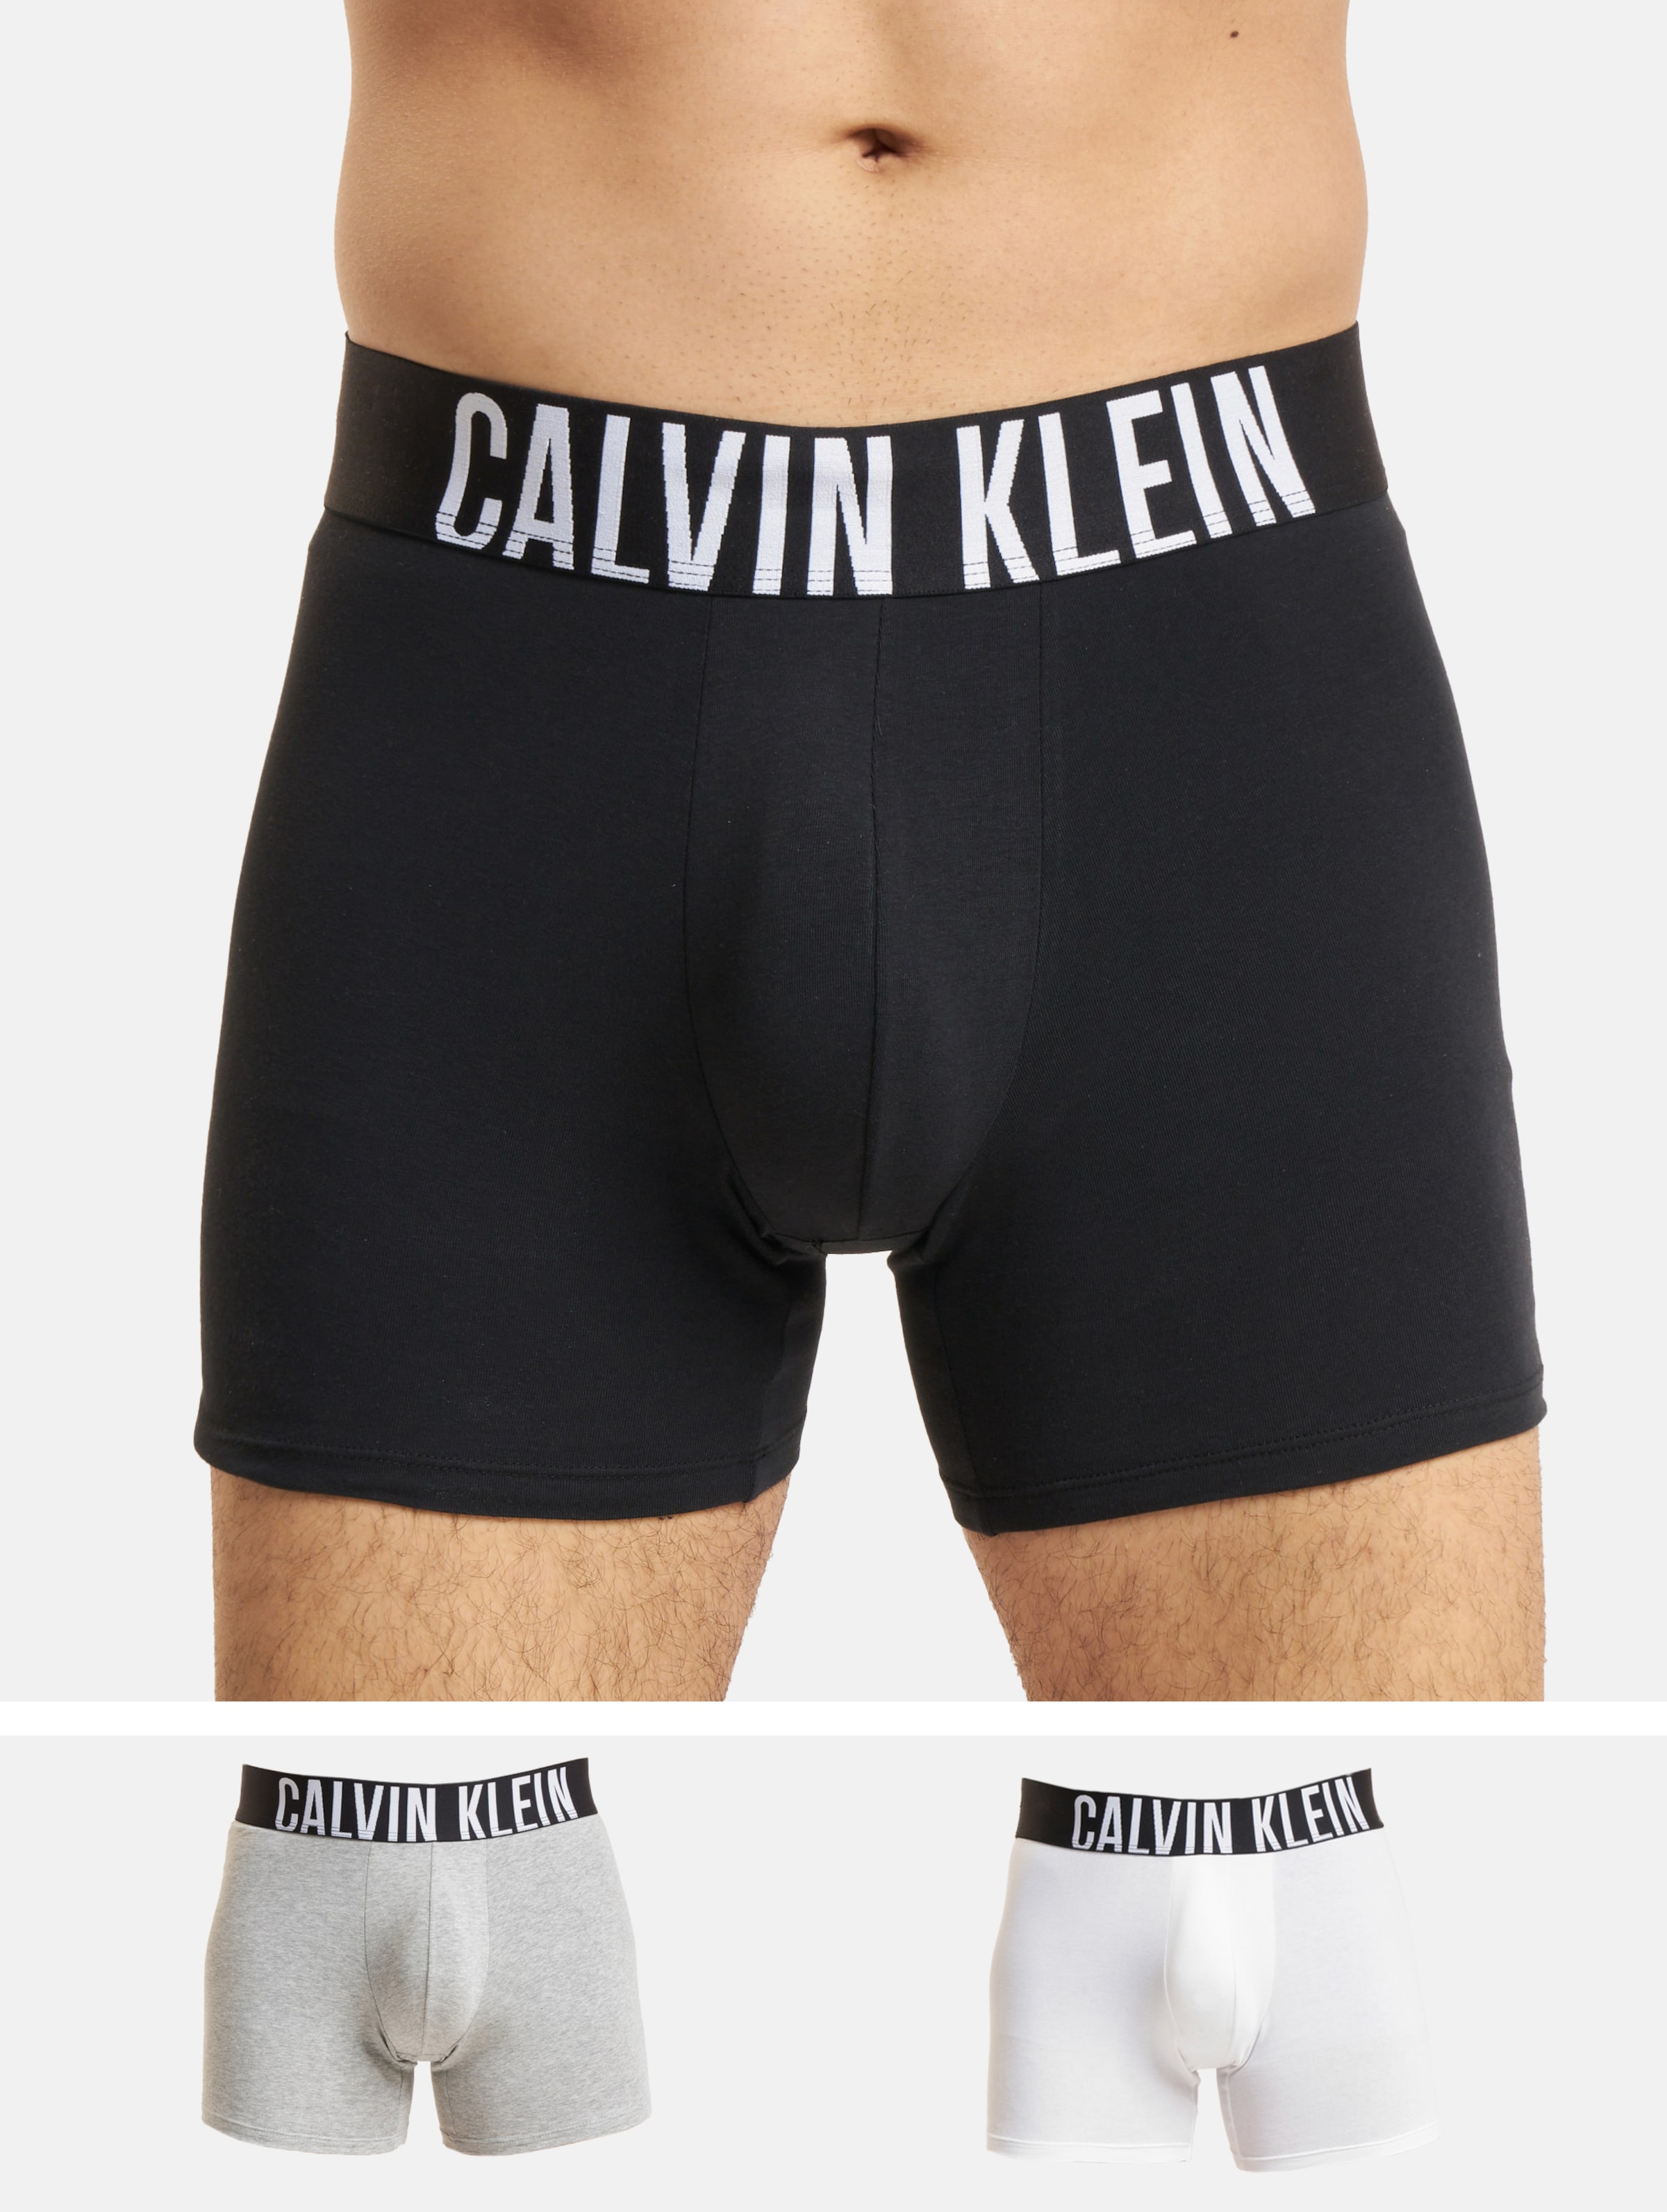 Calvin Klein Brief 3 Pack Boxershorts Männer,Unisex op kleur grijs, Maat XL